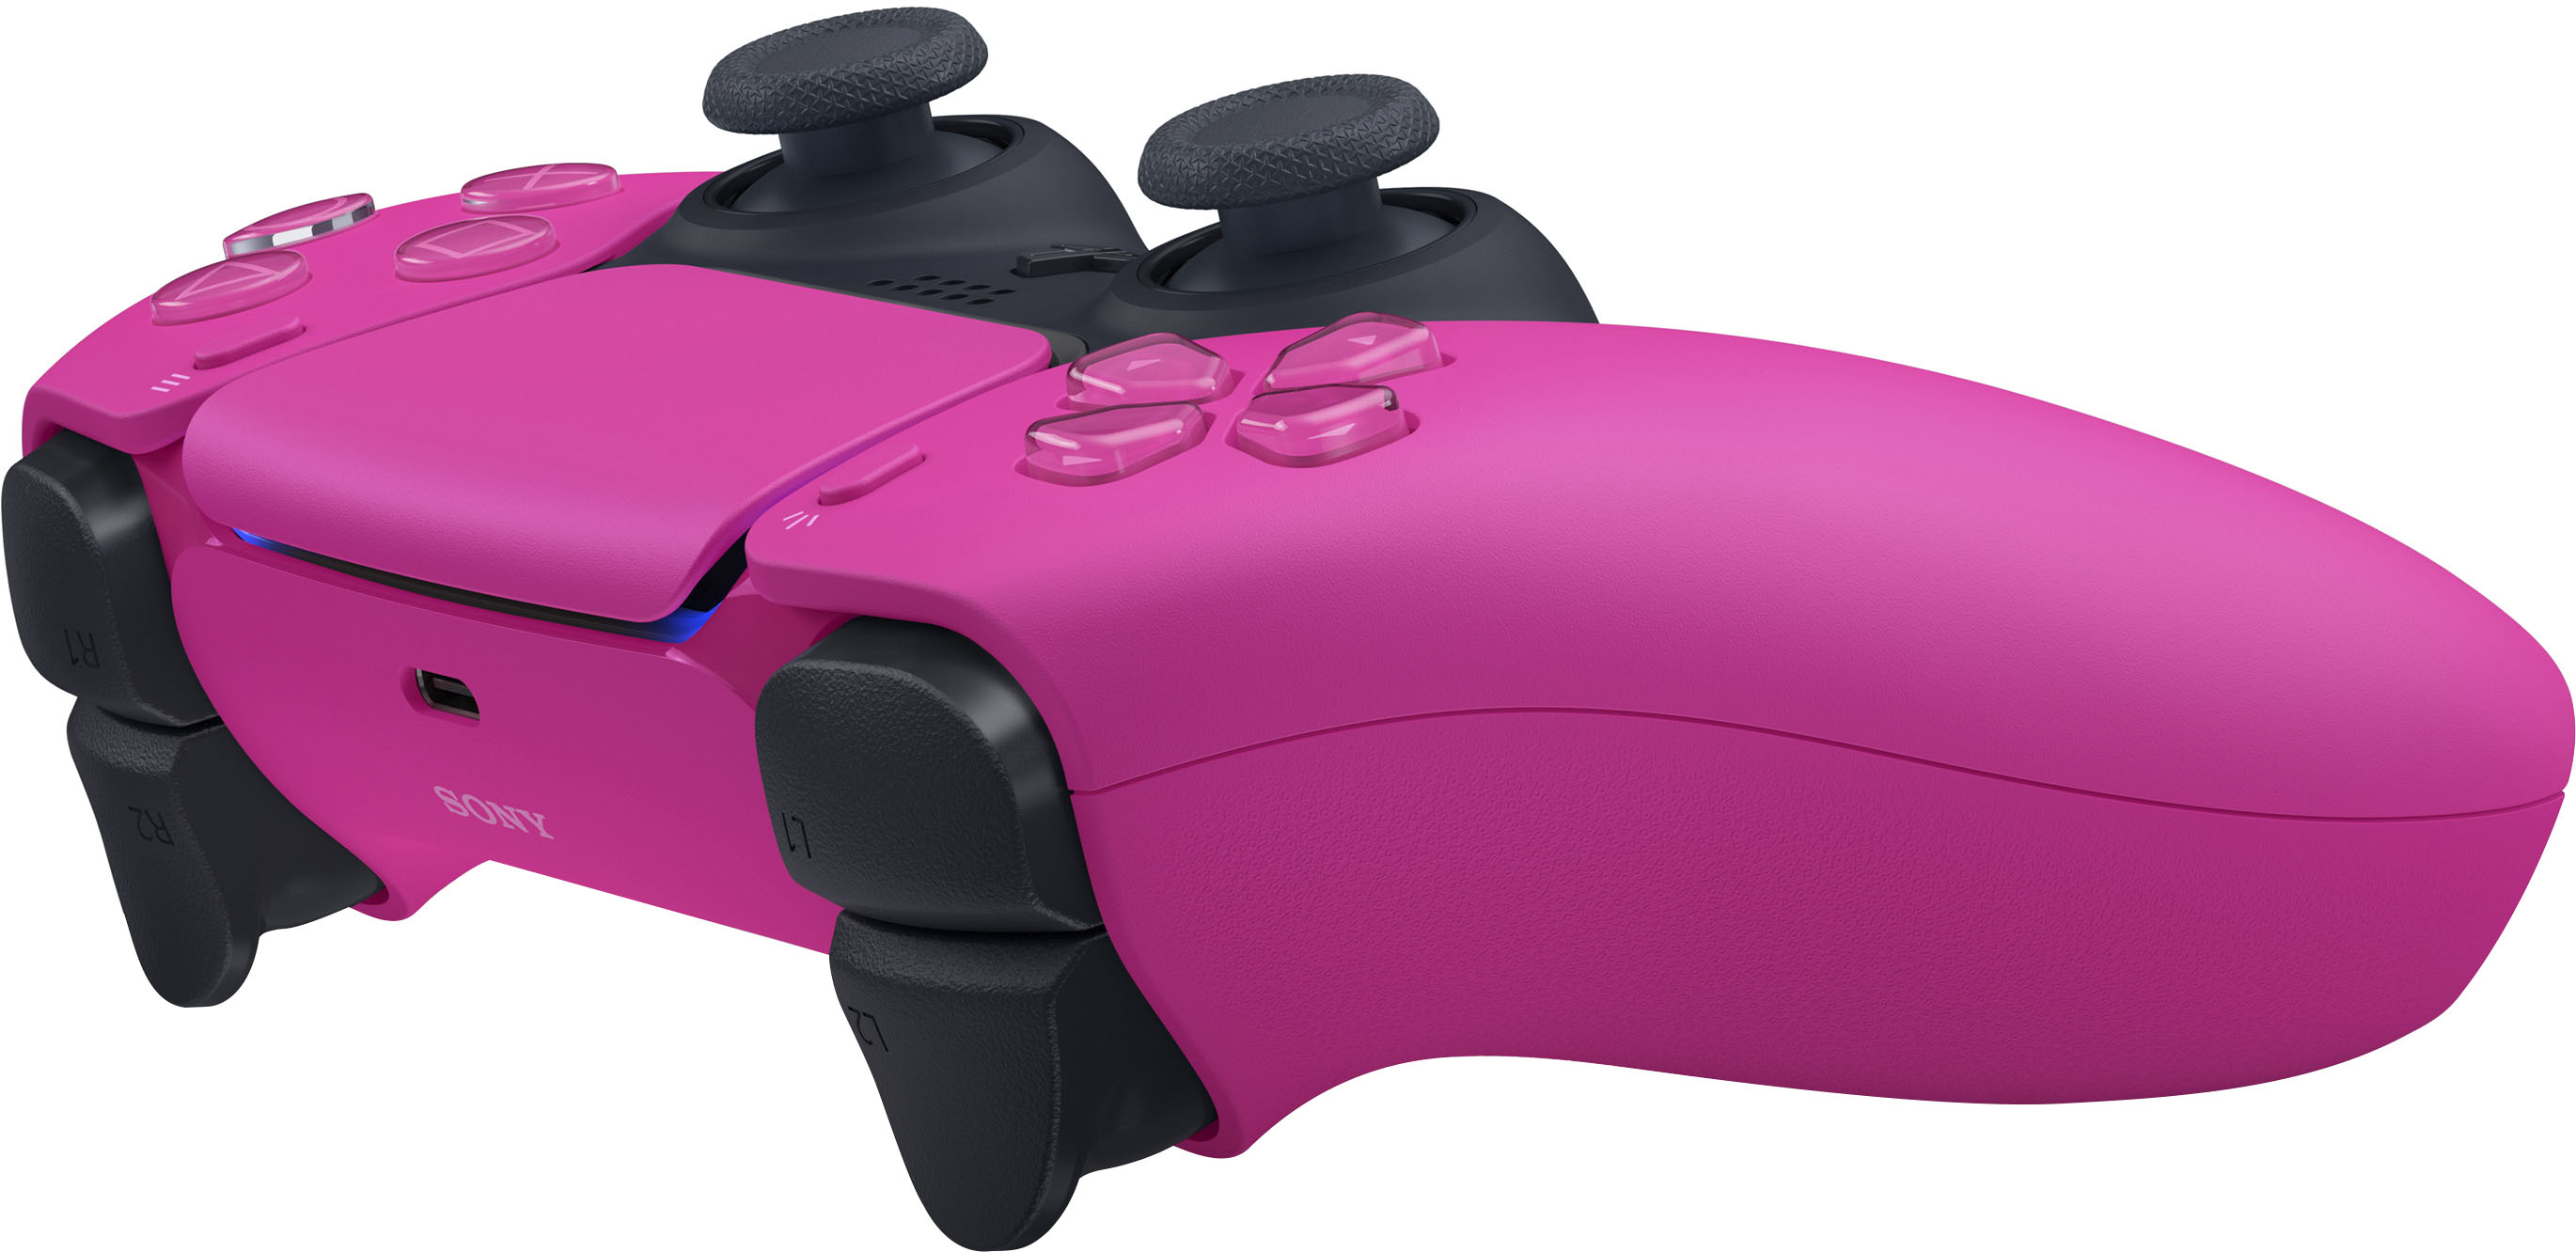 Left View: Sony - PlayStation 5 - DualSense Wireless Controller - Nova Pink